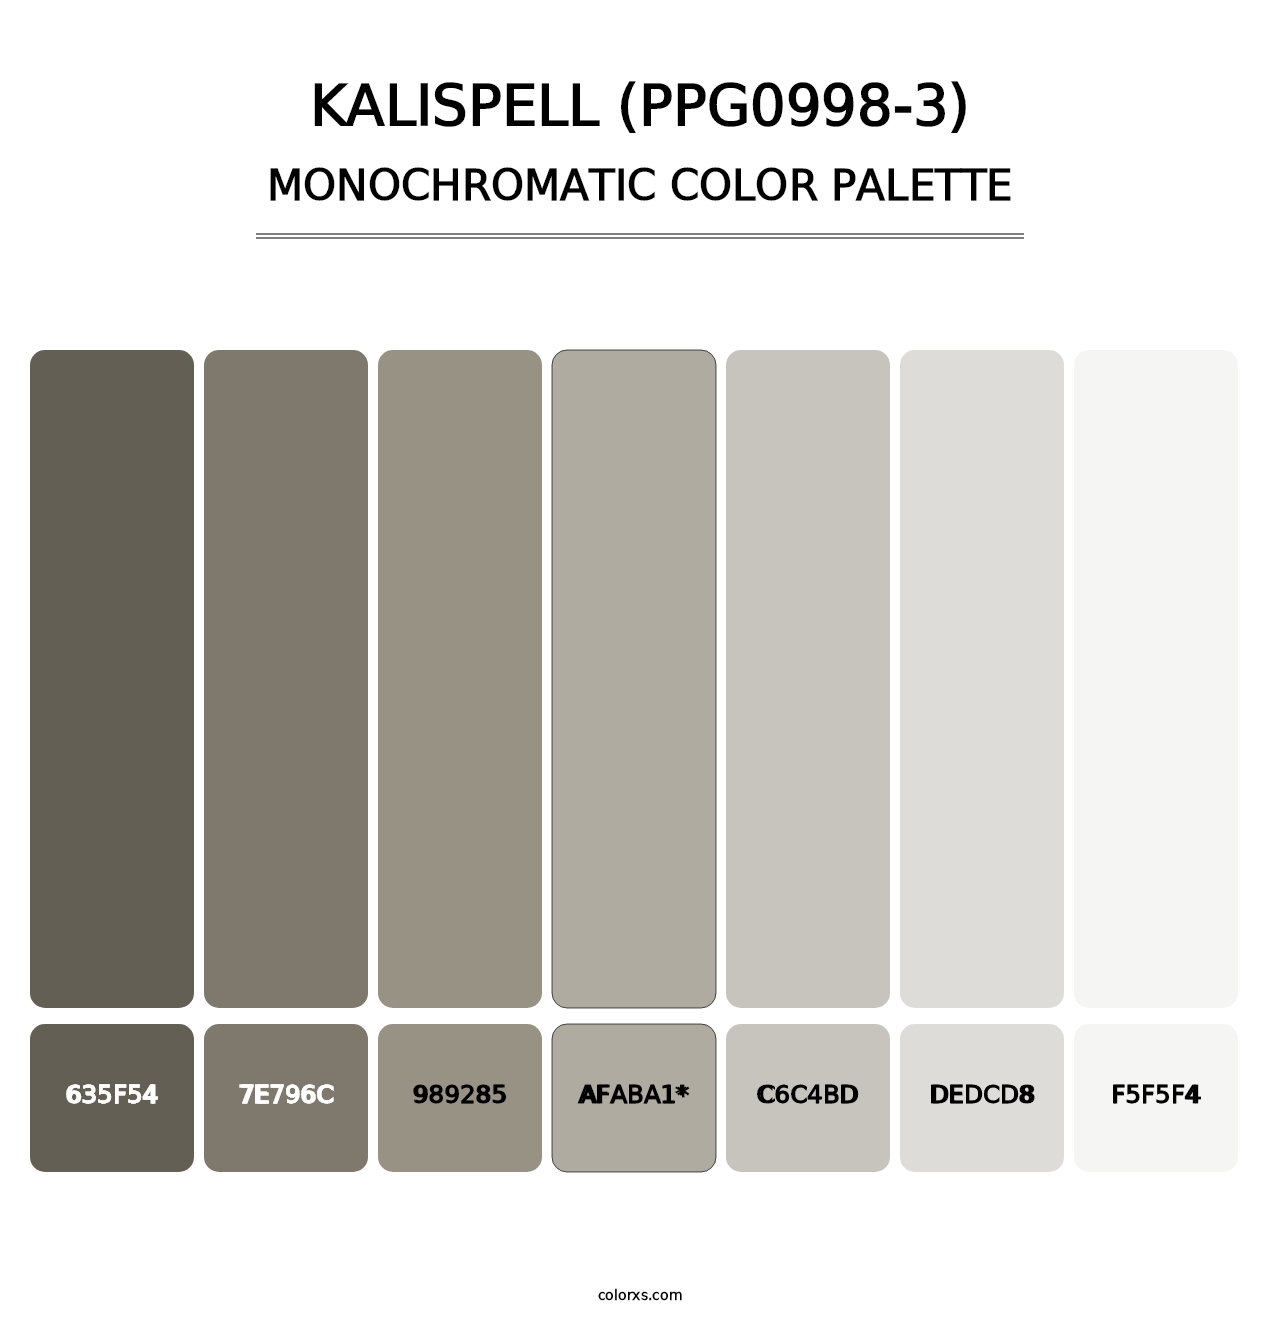 Kalispell (PPG0998-3) - Monochromatic Color Palette